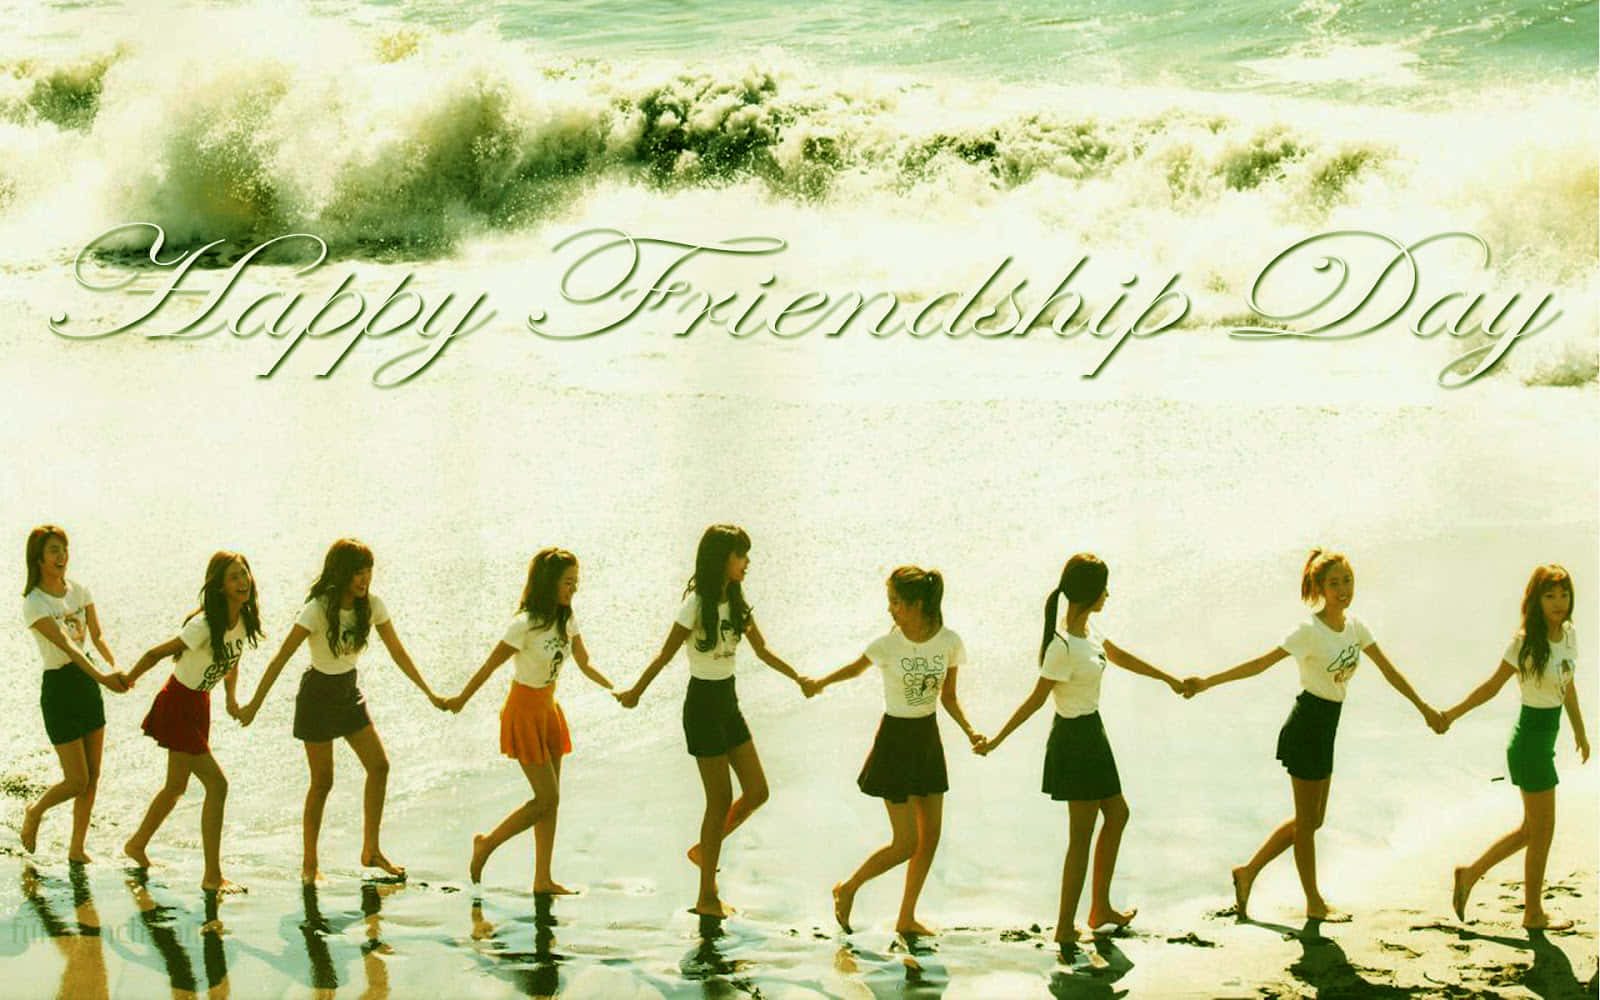 Caption: "Celebrate Bonds of Unity | Friendship Day Picture"